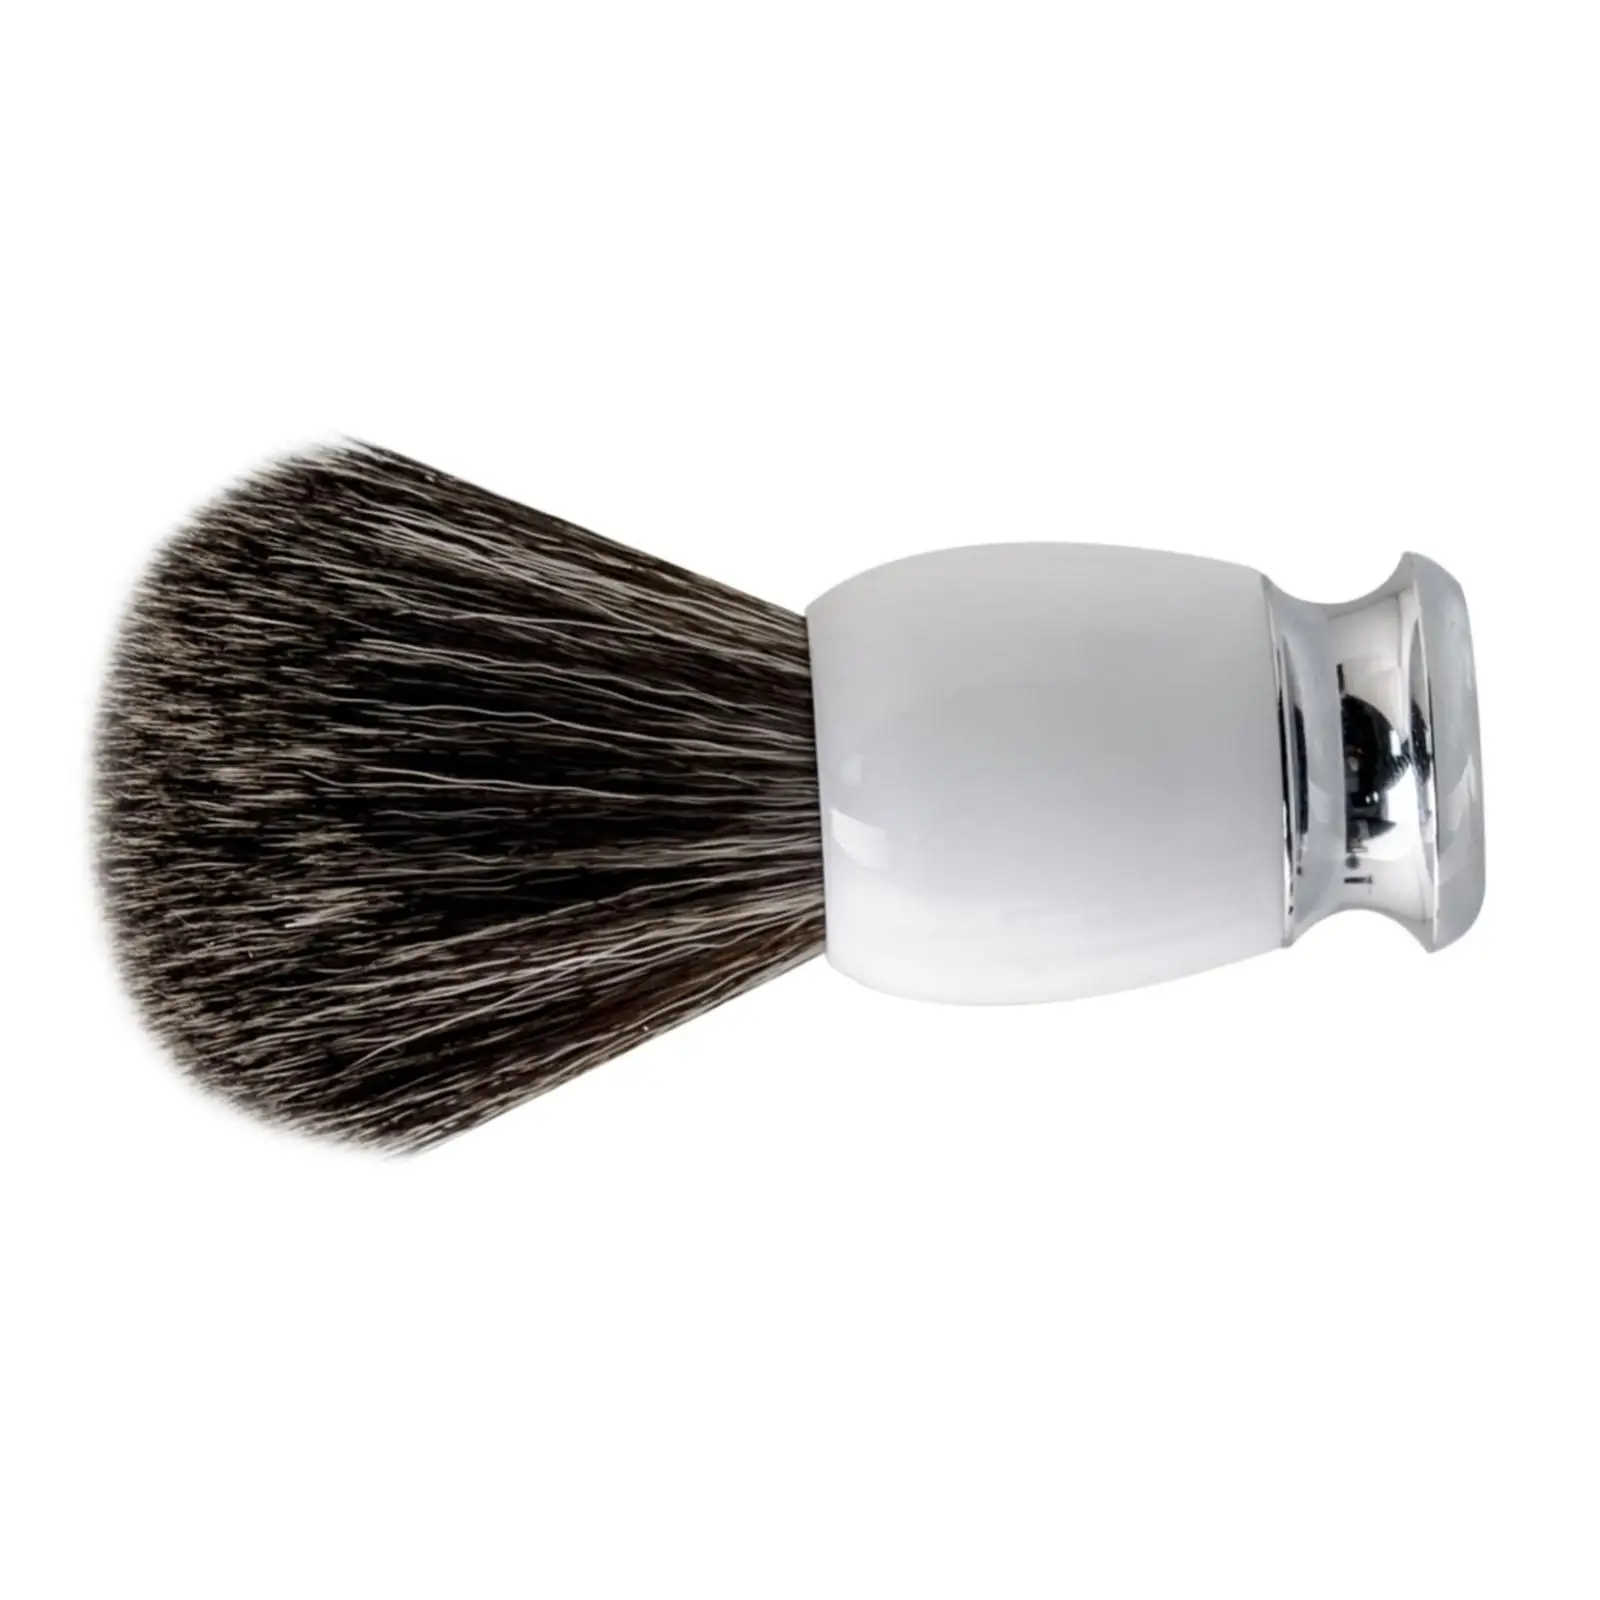 Shaving Brush Beard Brush Luxury Shave Accessory Rich and Fast Lather Shaving Cream Soap Brush Travel Shaving Cream Brush